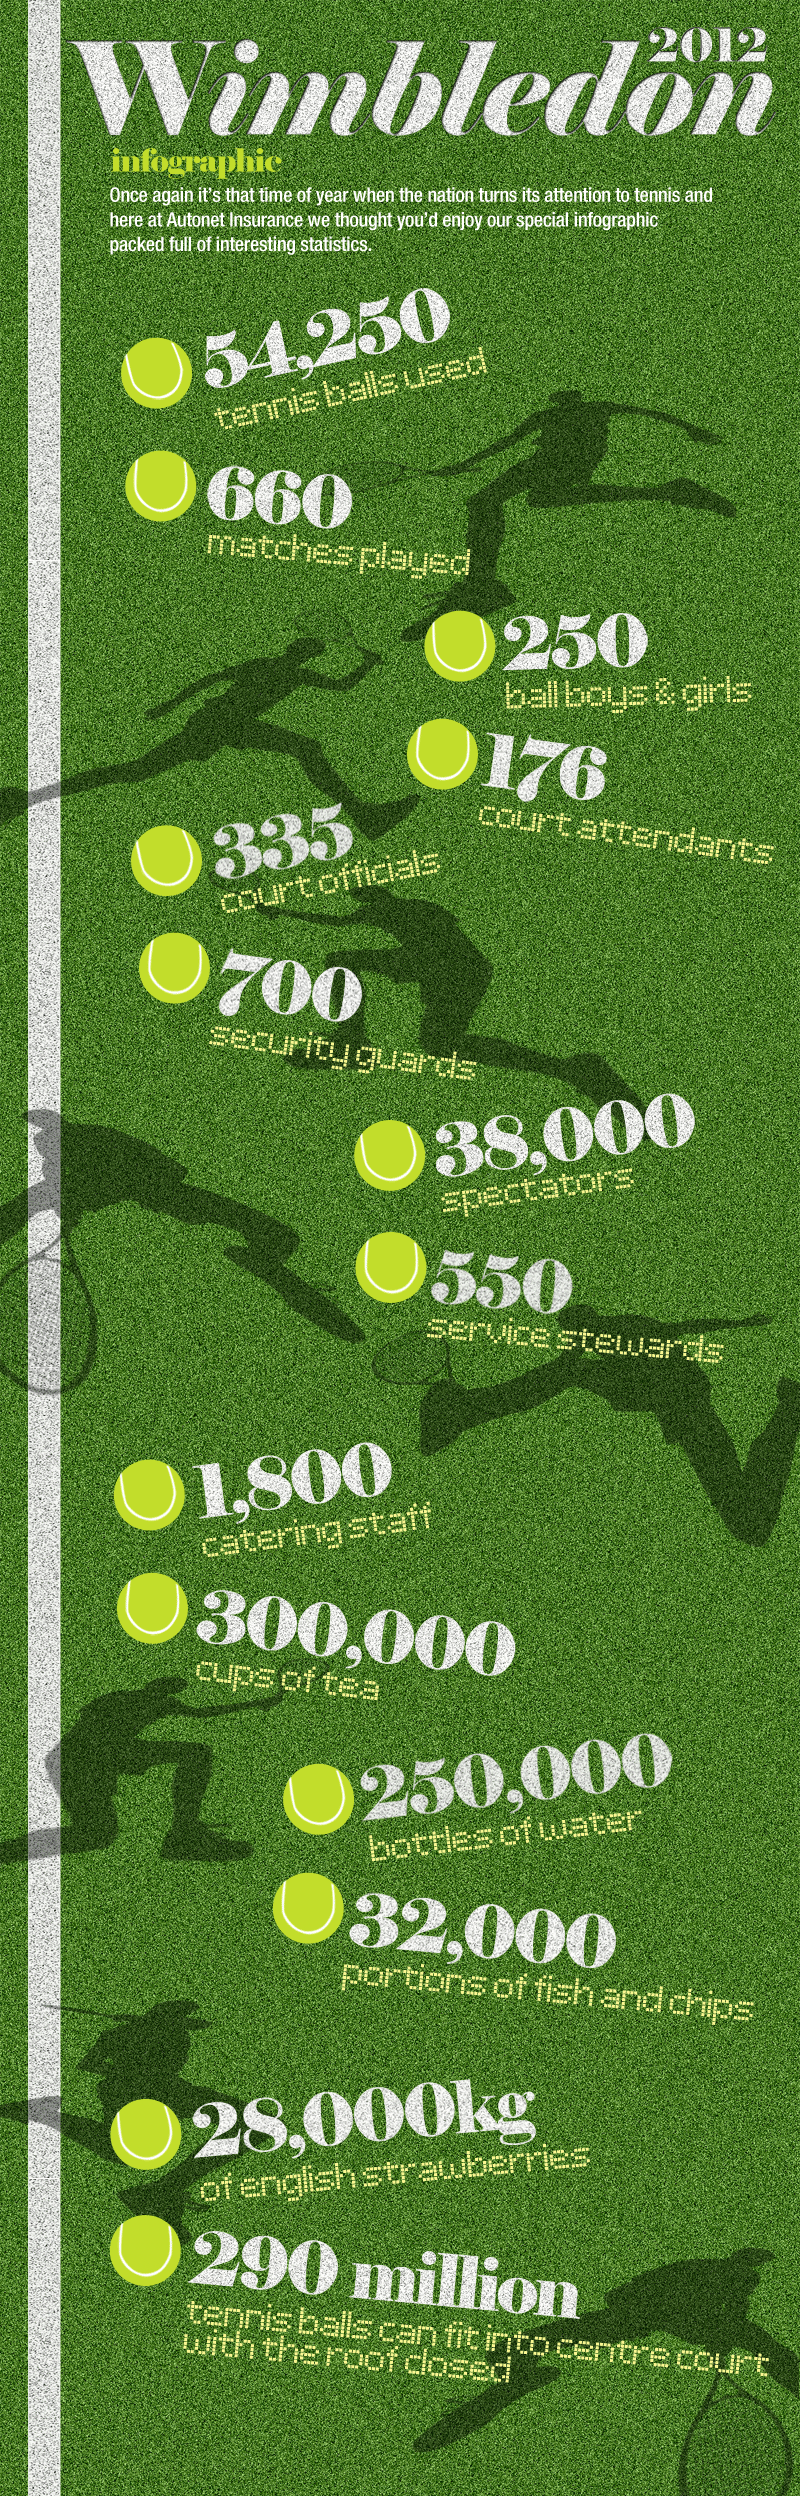 Wimbledon 2012 Stats Infographic